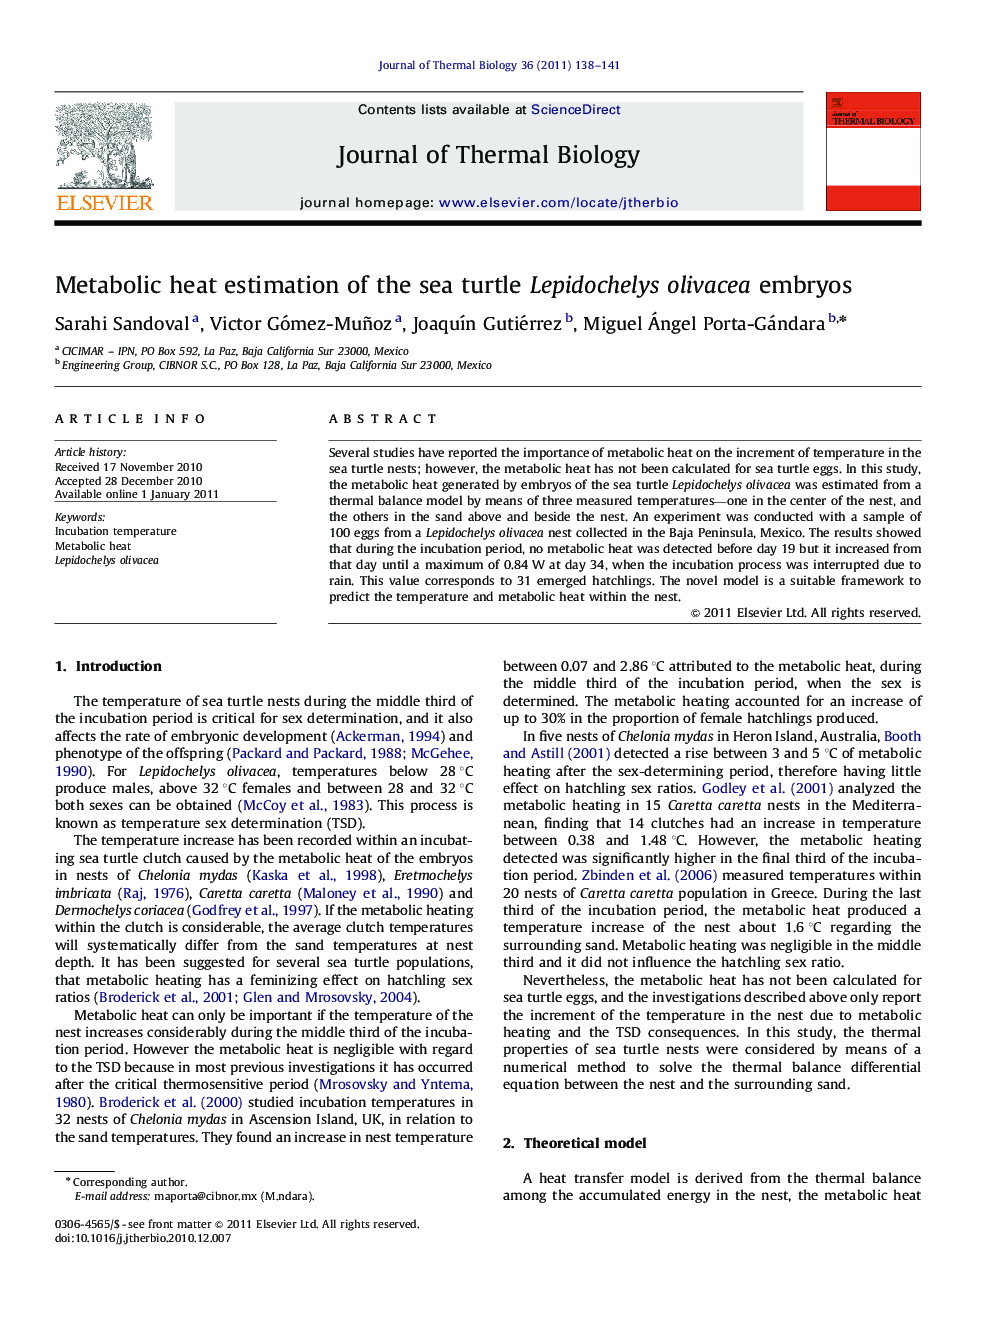 Metabolic heat estimation of the sea turtle Lepidochelys olivacea embryos